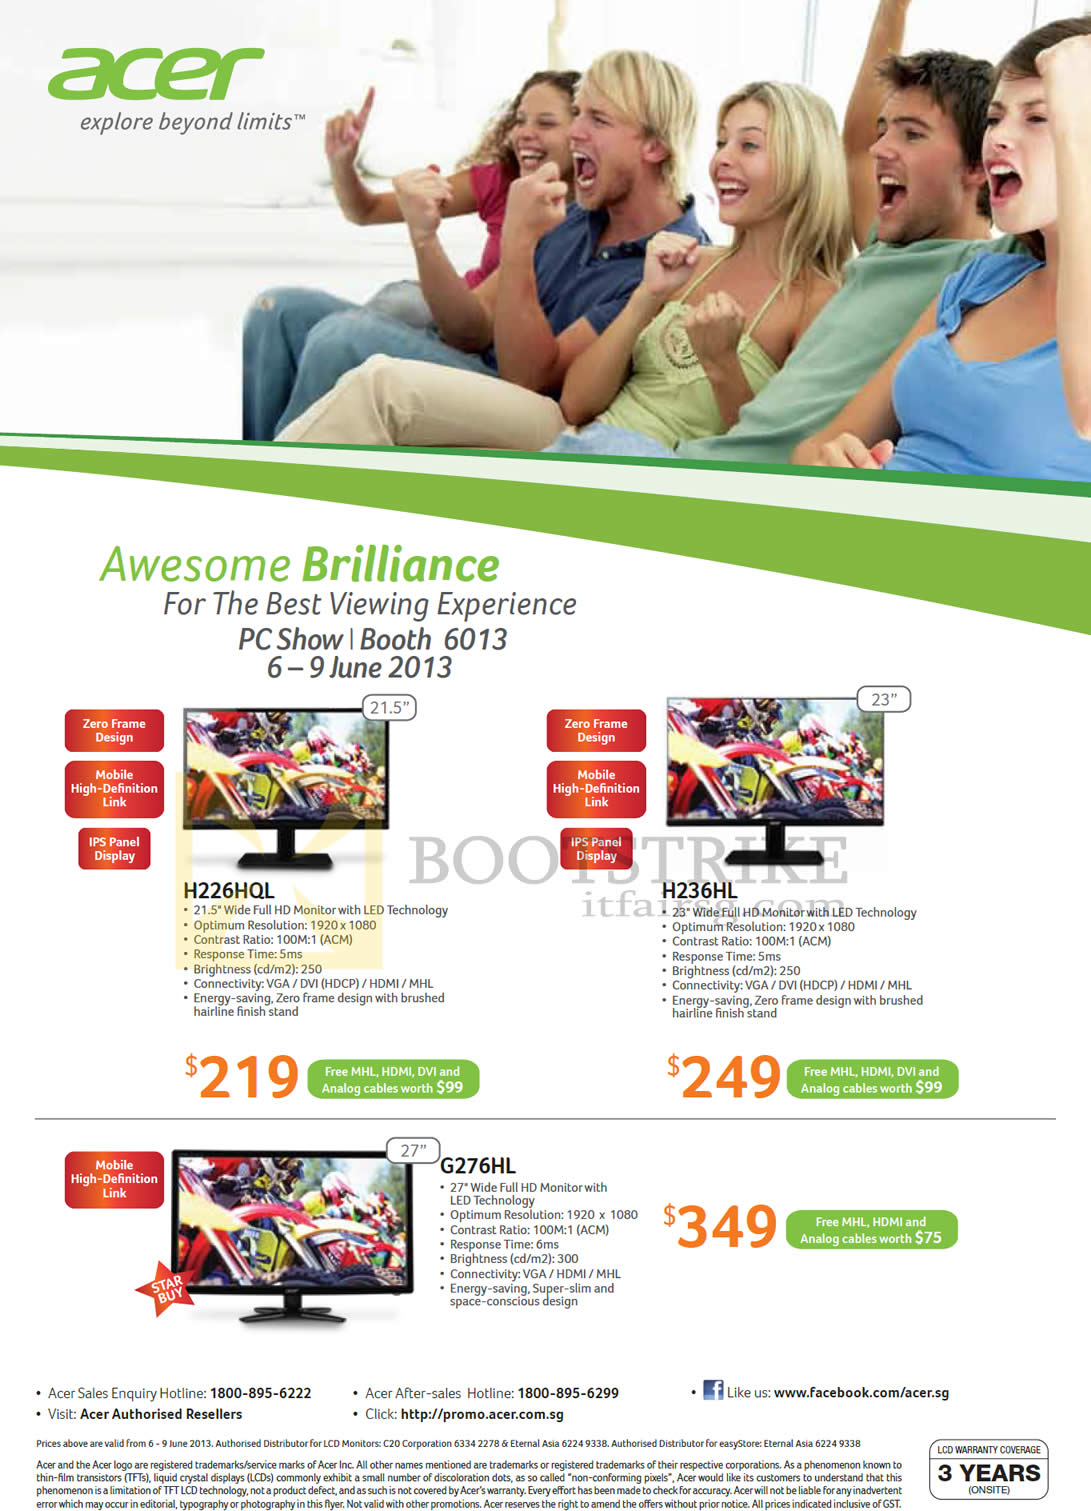 PC SHOW 2013 price list image brochure of Acer Monitors H226HQL, H236HL, G276HL